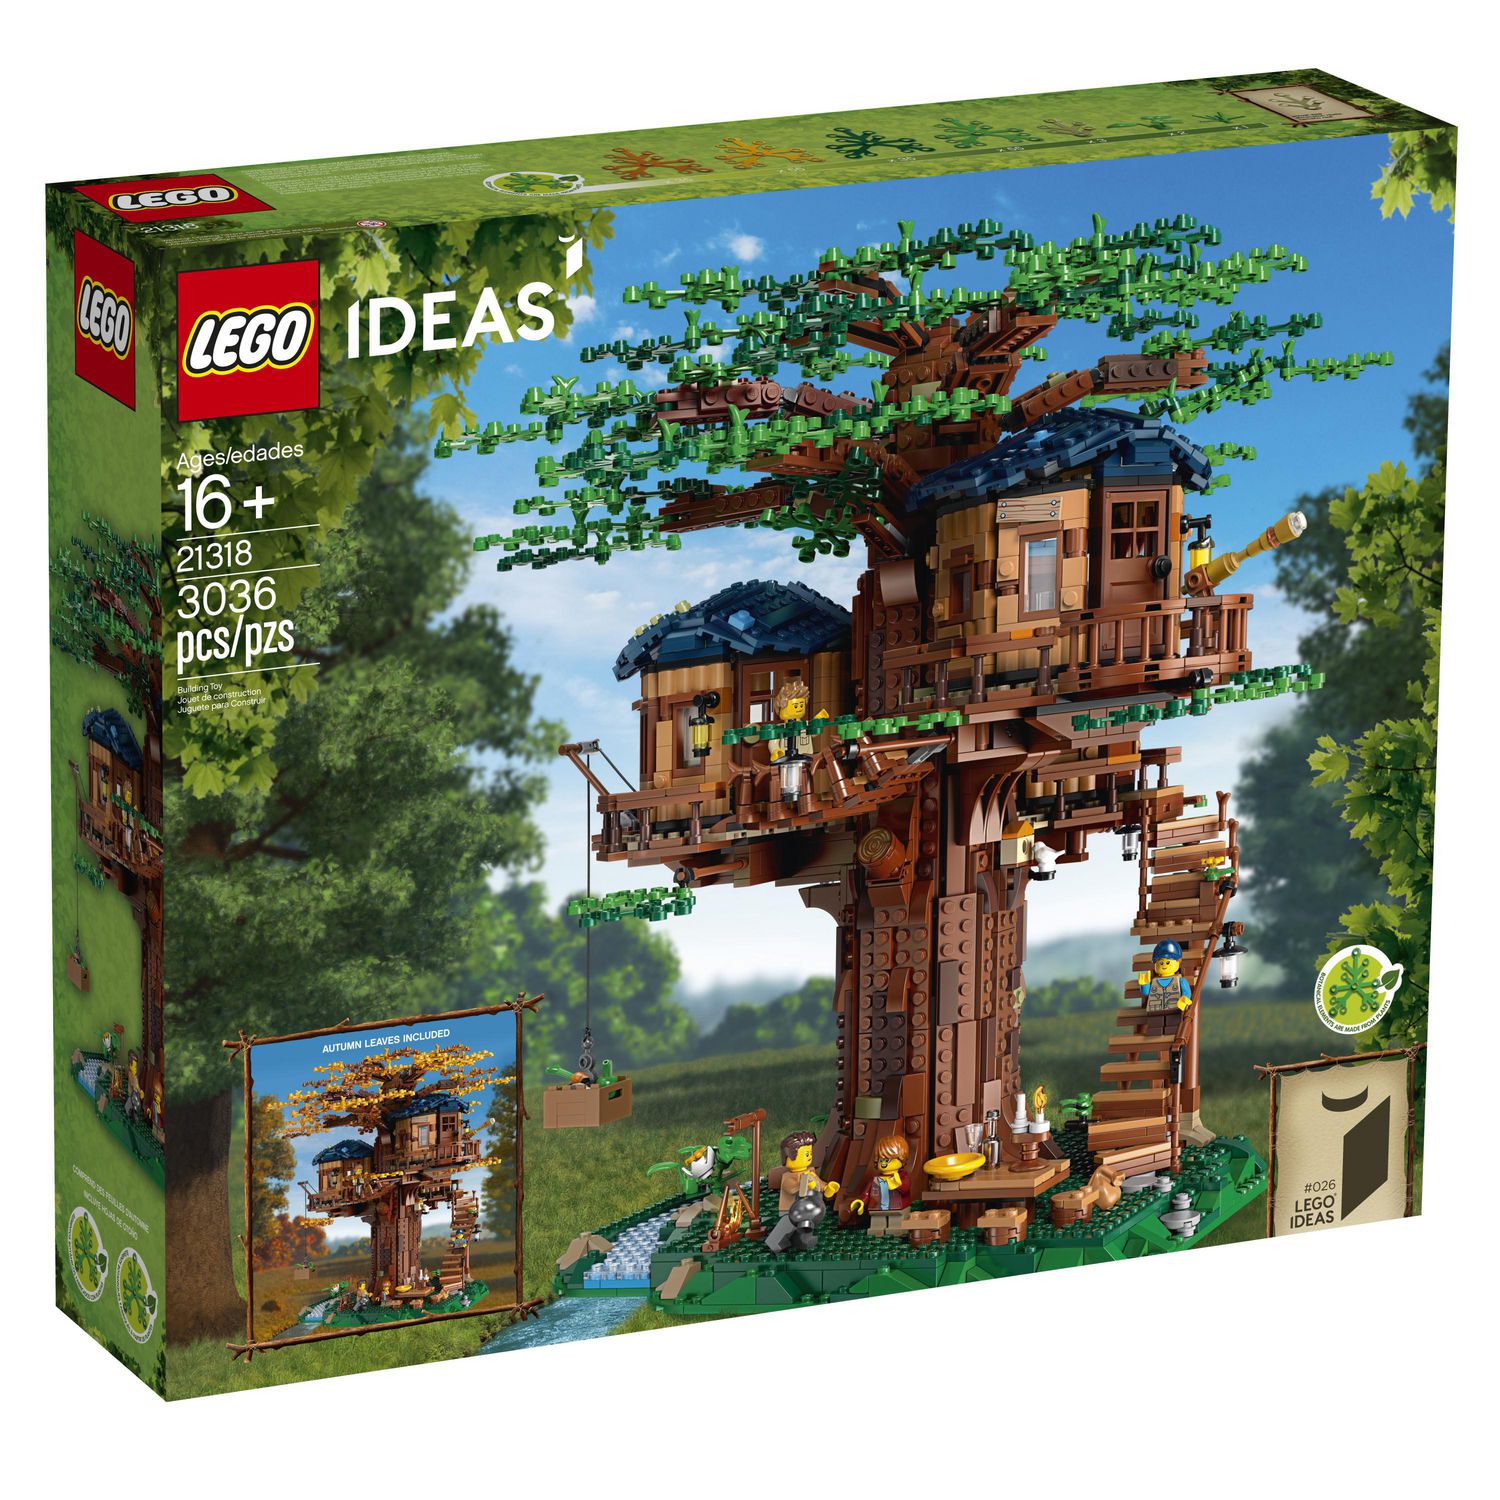 LEGO Ideas 21318 Tree House Toy Building Kit (3036 Piece)